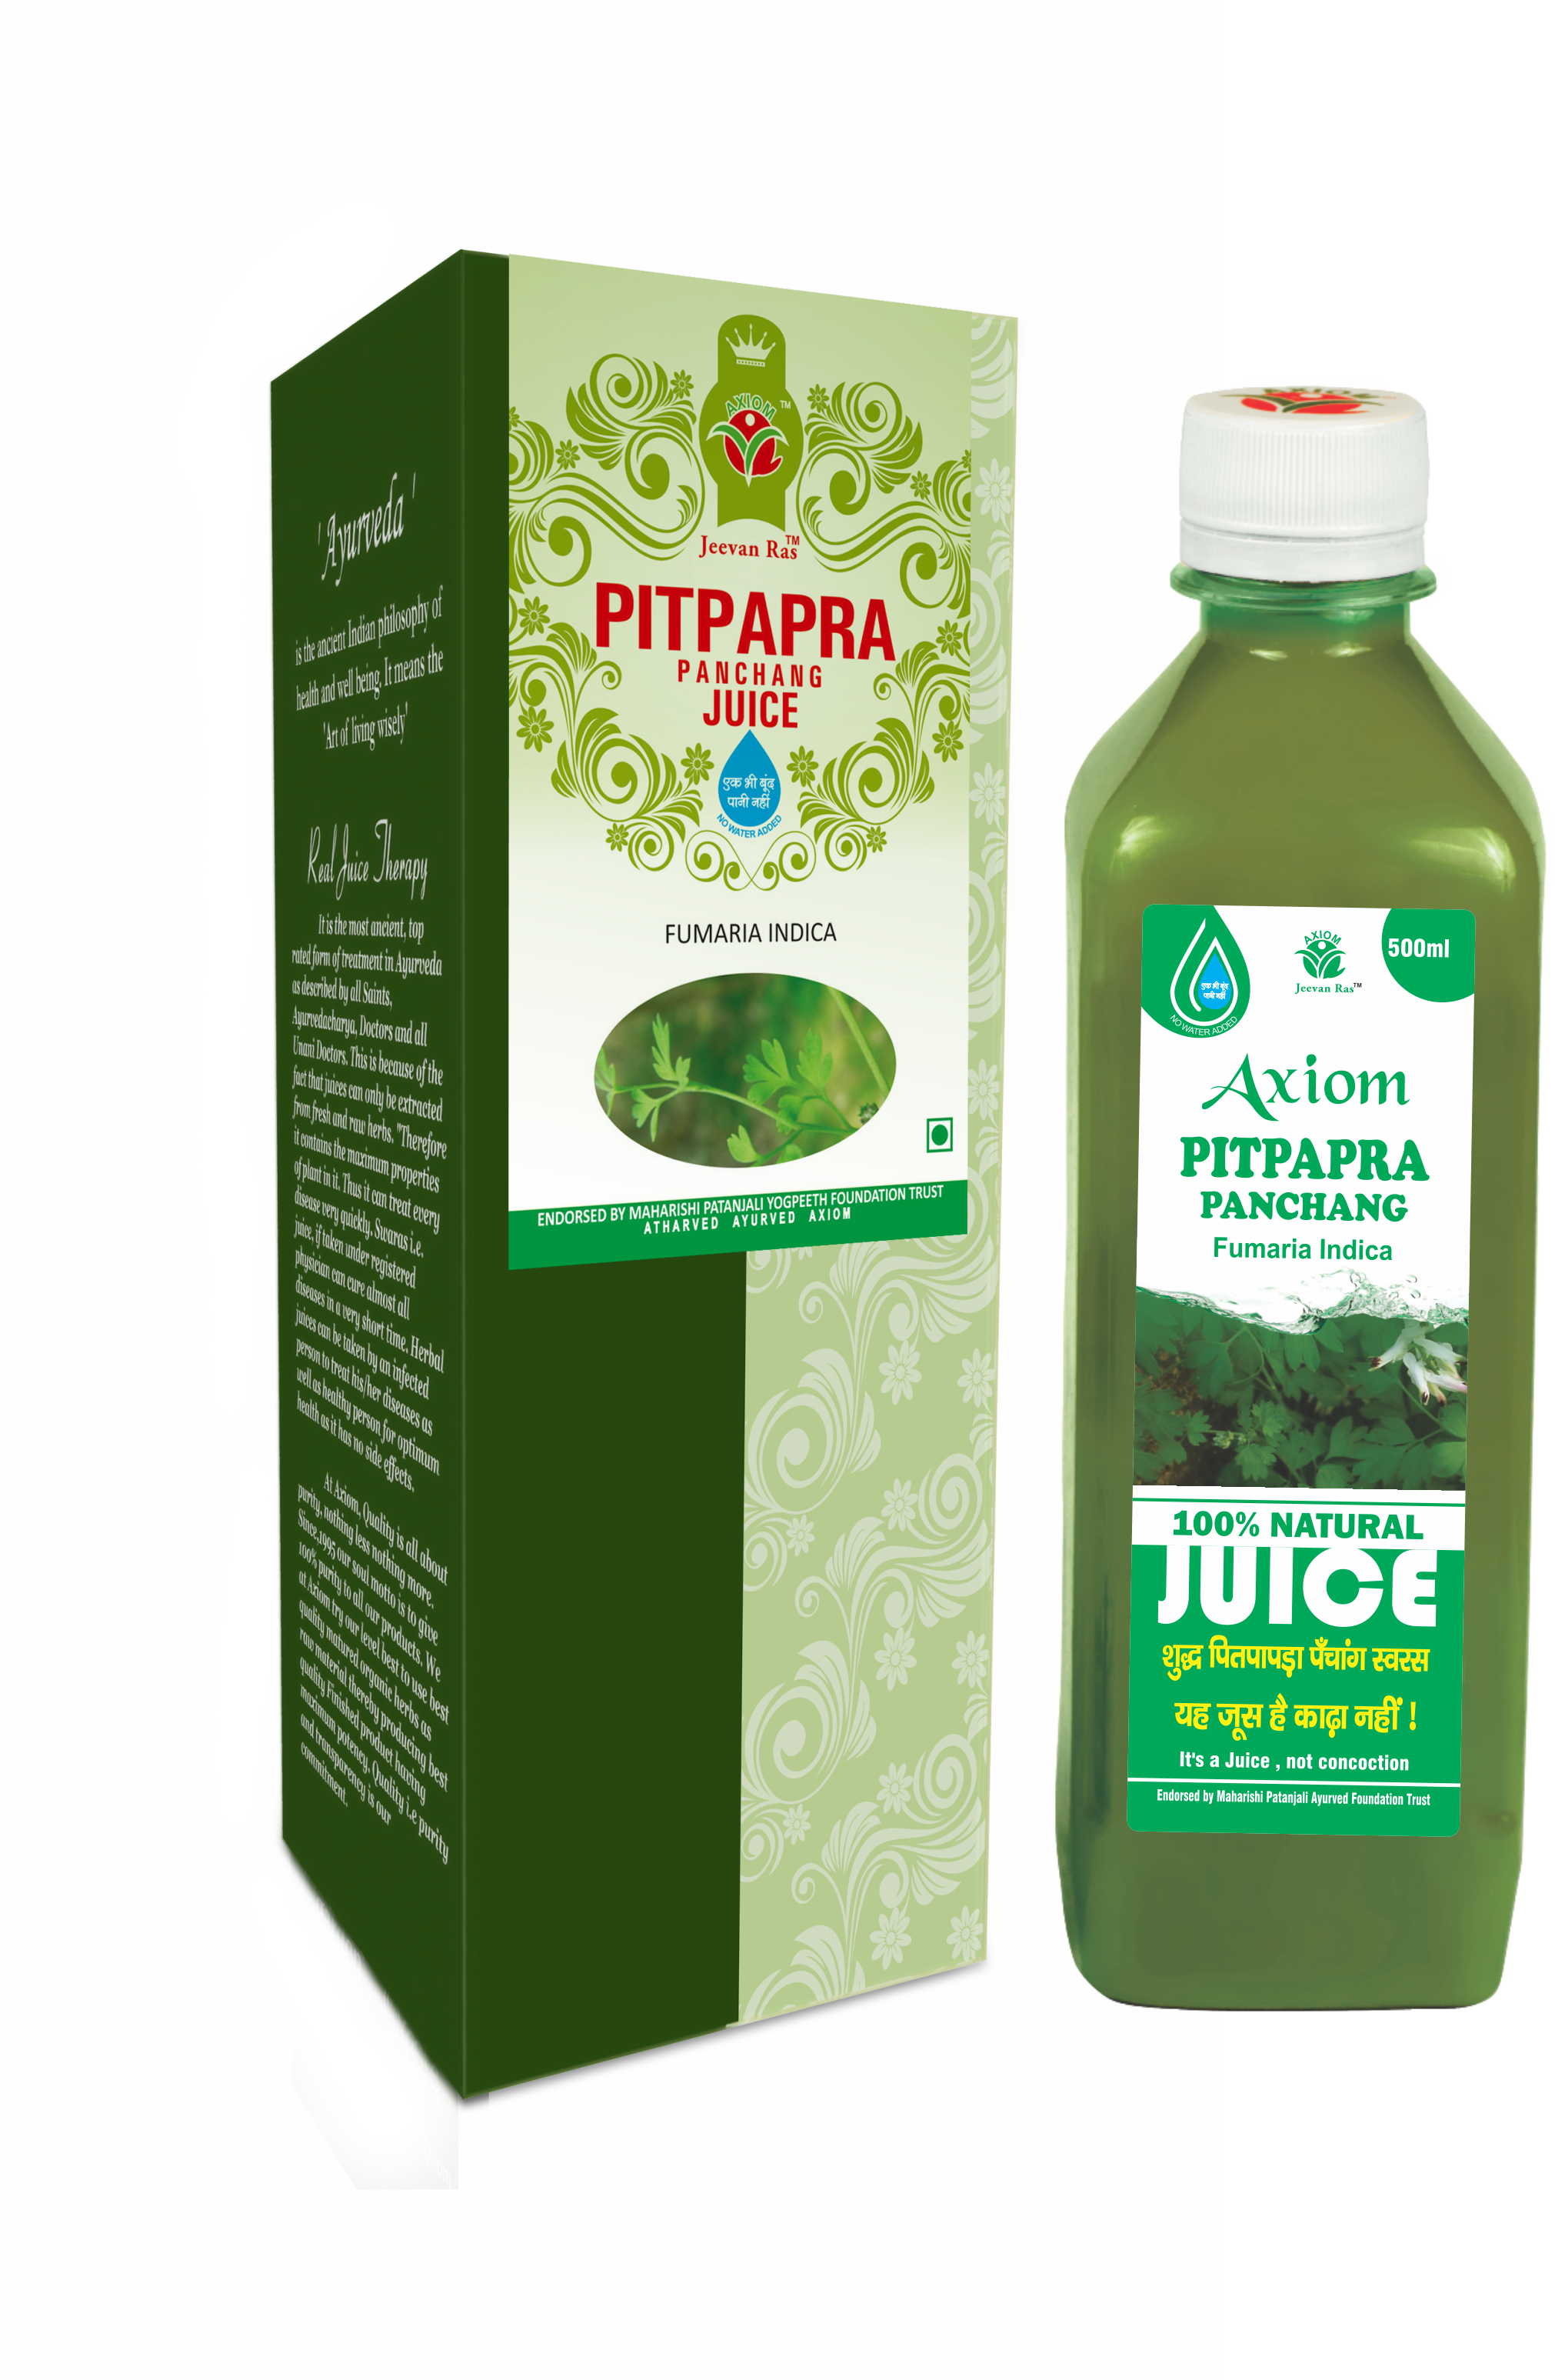 Axiom Pitpapara Juice